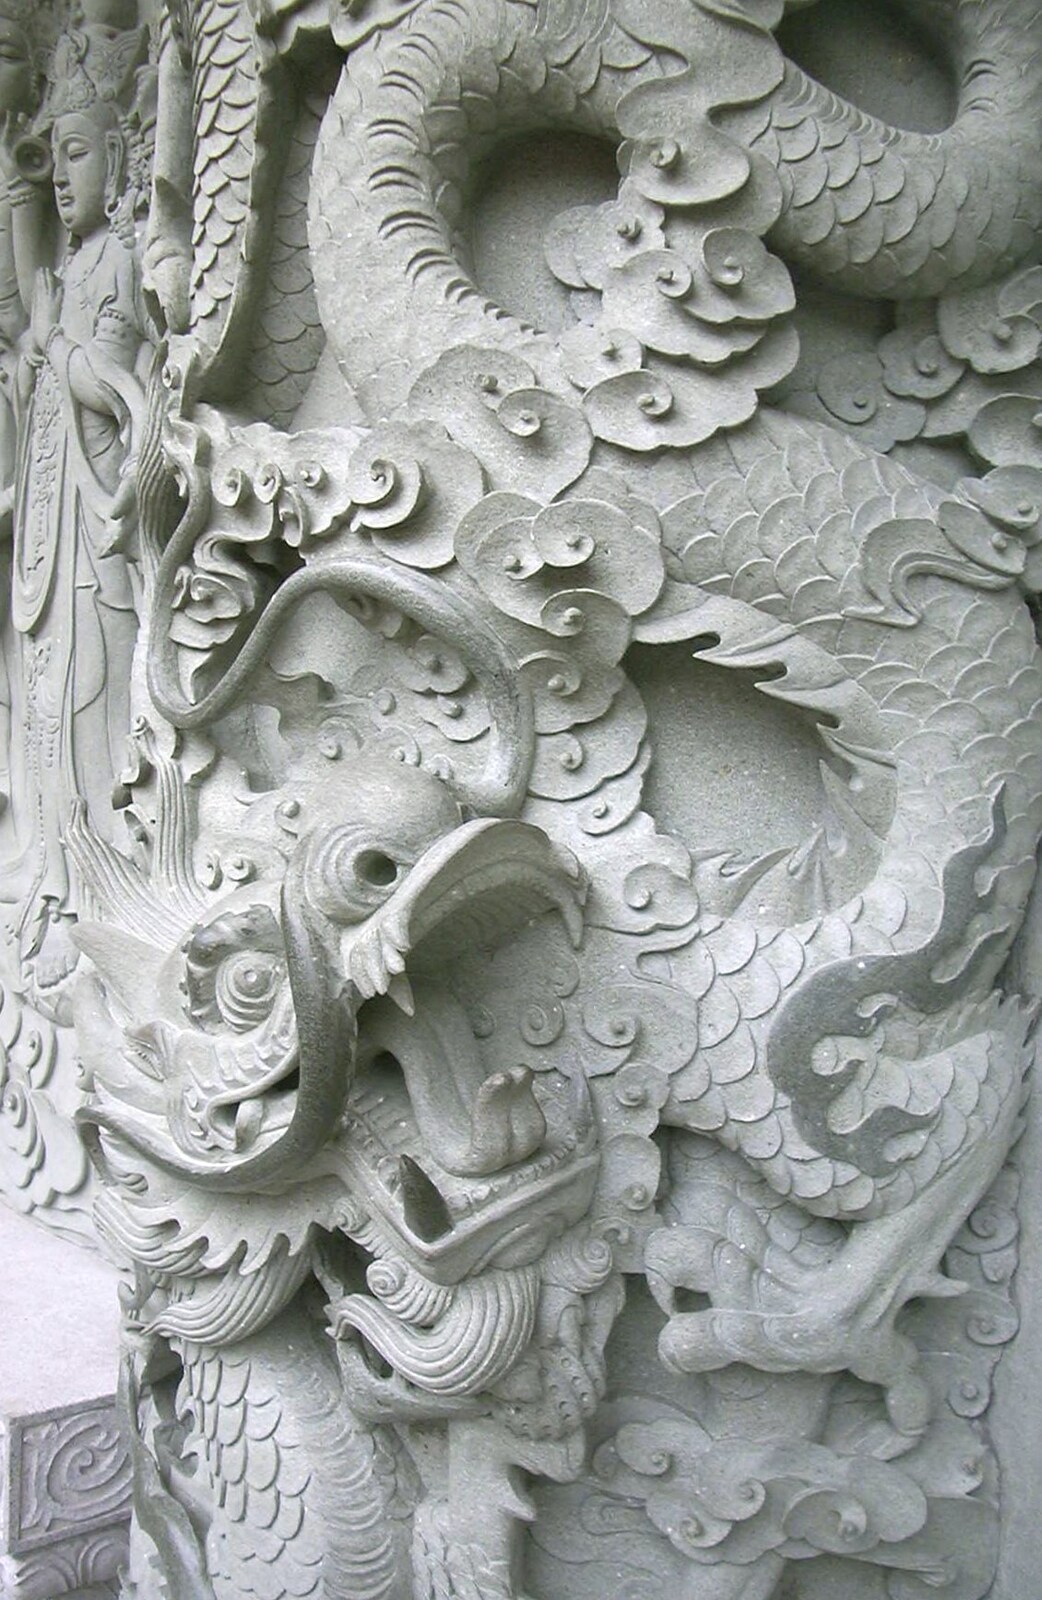 Lantau Island and the Po Lin Monastery, Hong Kong, China - 14th August 2001: Carved dragons